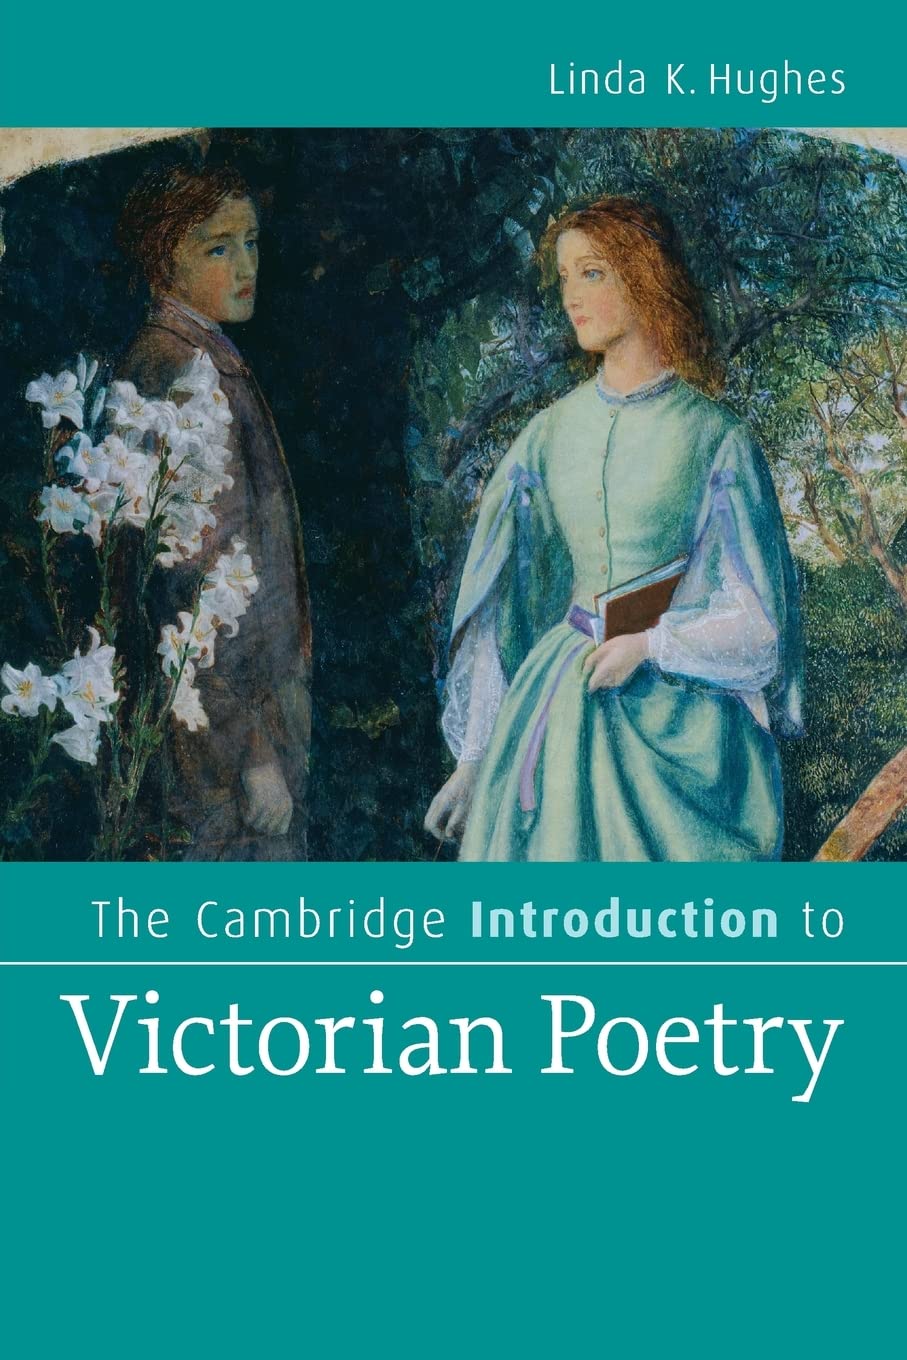 CAMBRIDGE INTRODUCTION TO VICTORIAN POETRY - Virginia Book Company